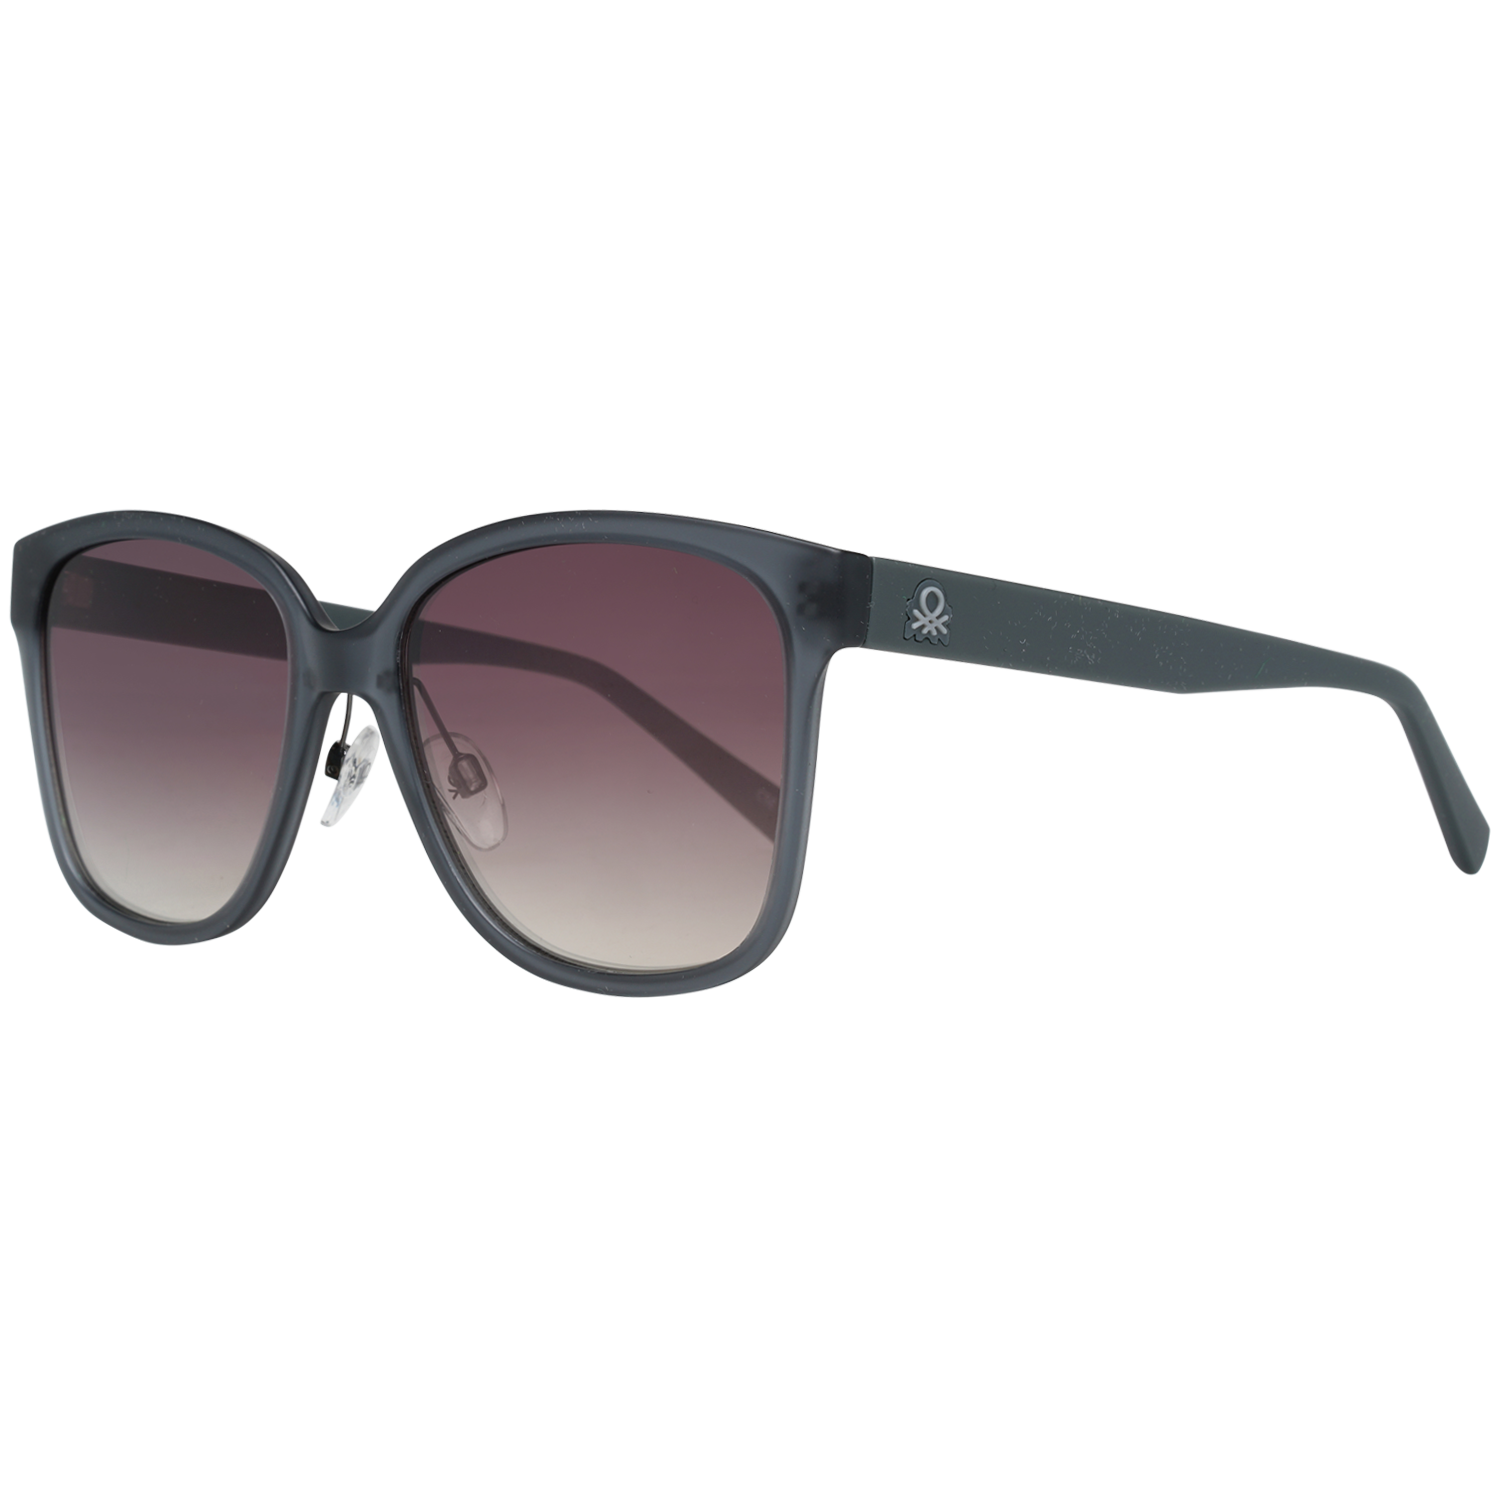 Benetton Sunglasses BE5007 921 56 Grey